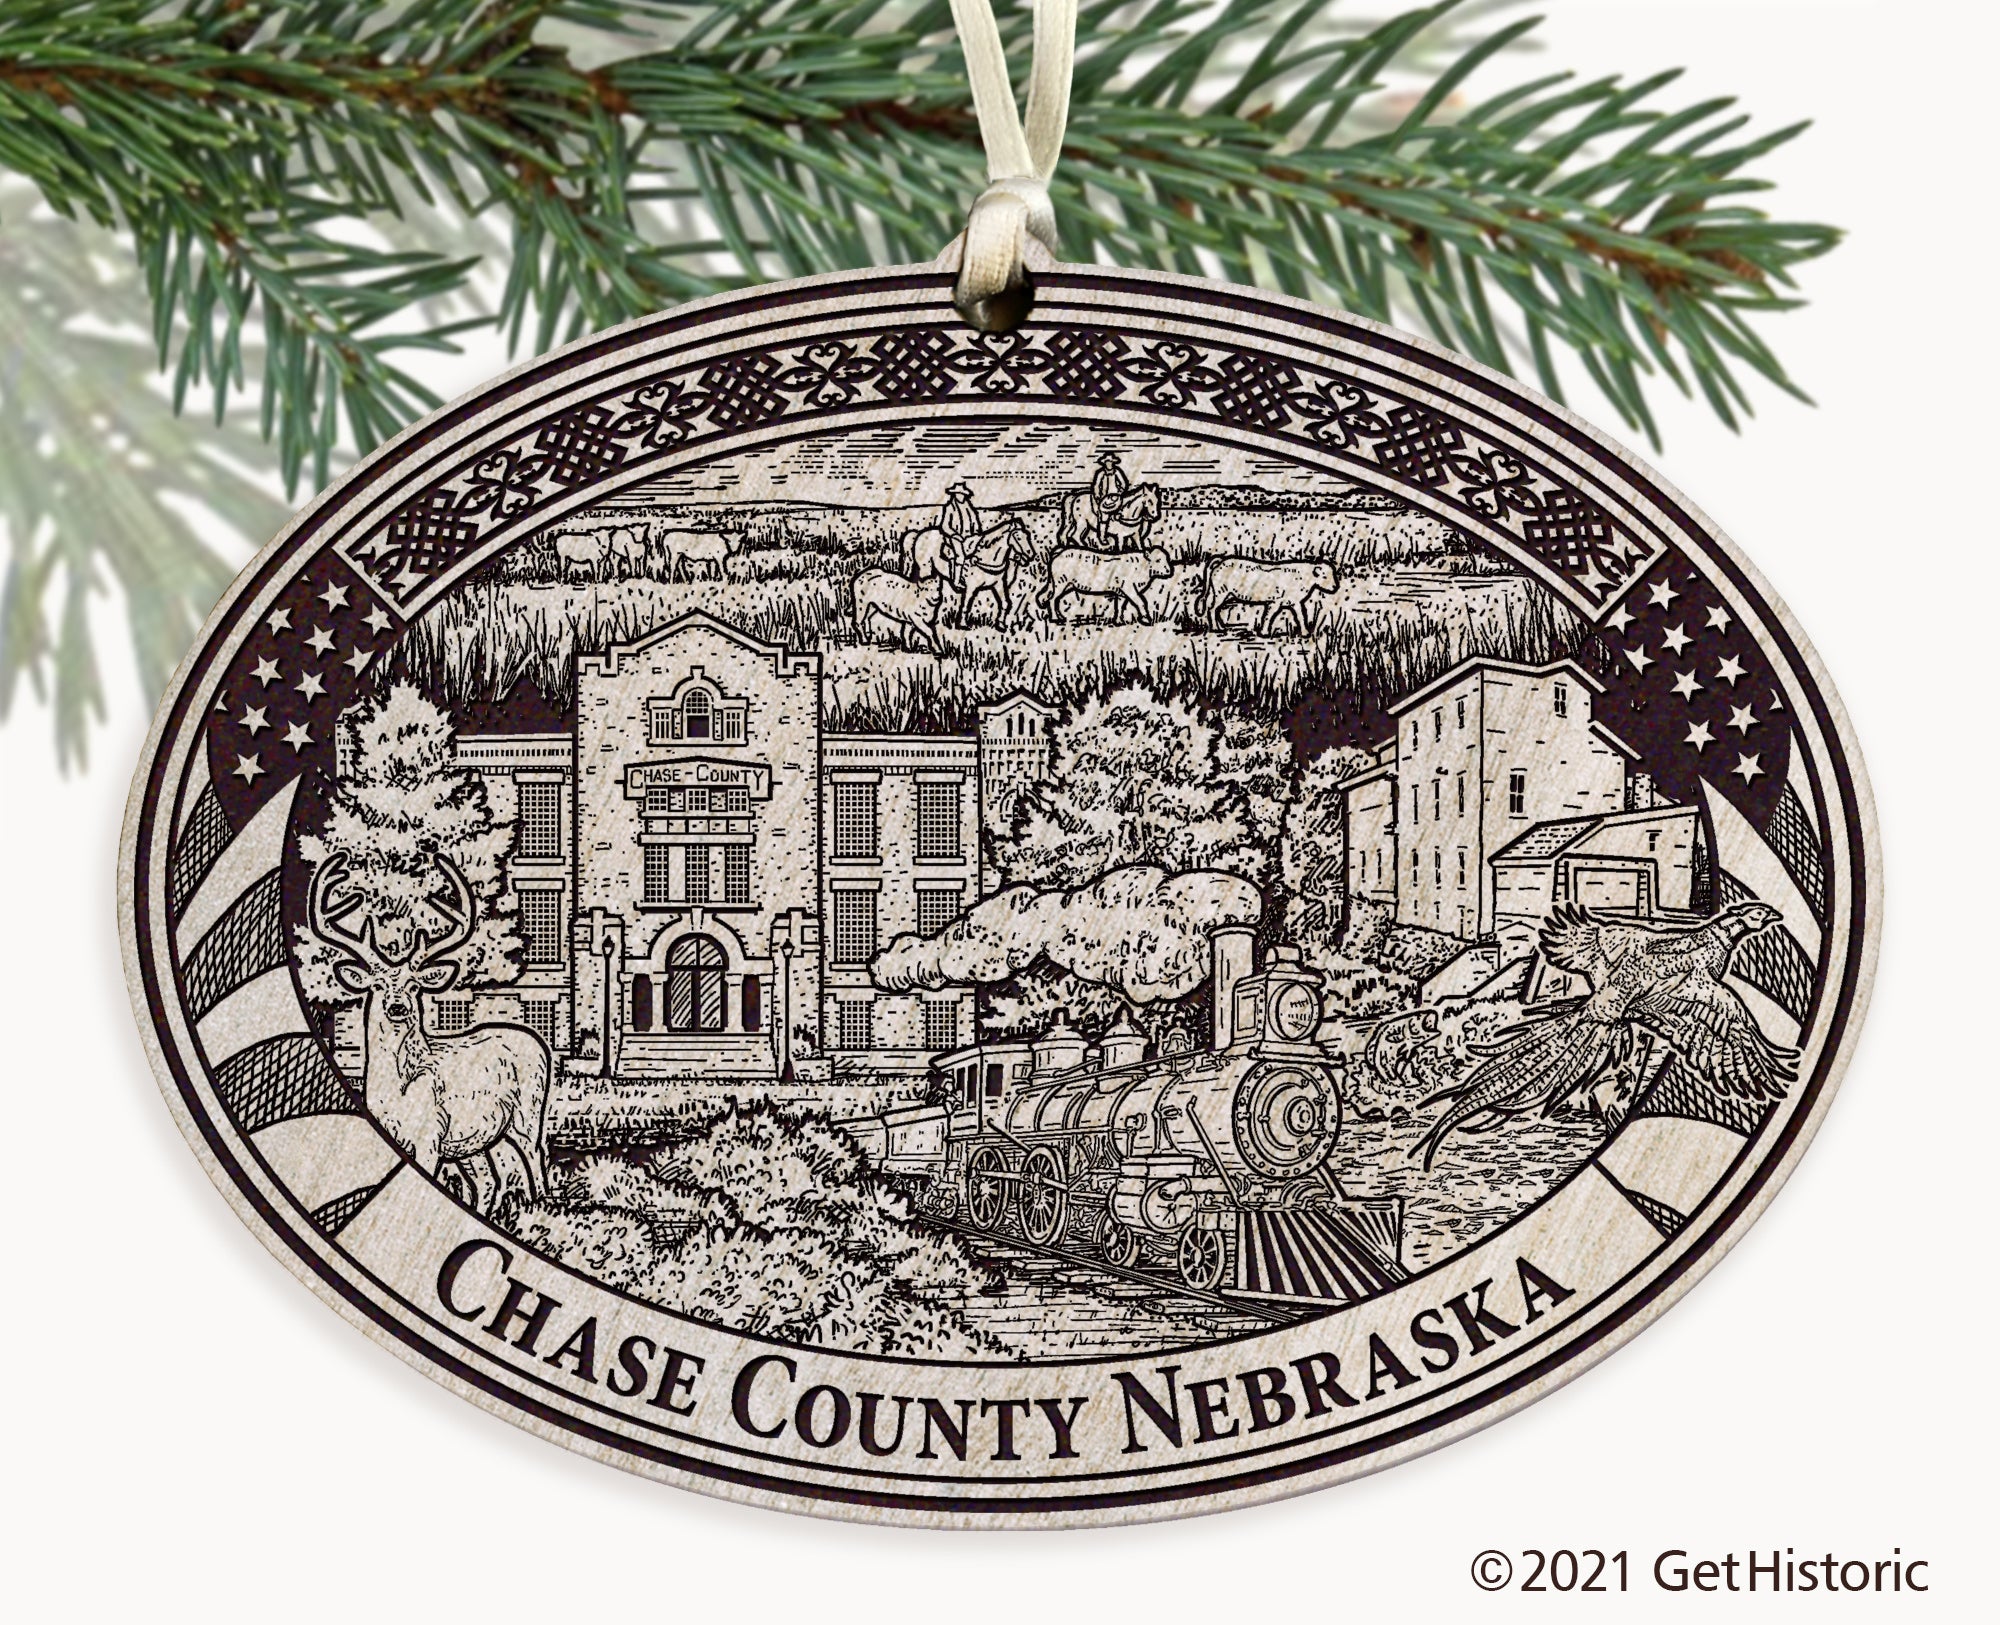 Chase County Nebraska Engraved Ornament